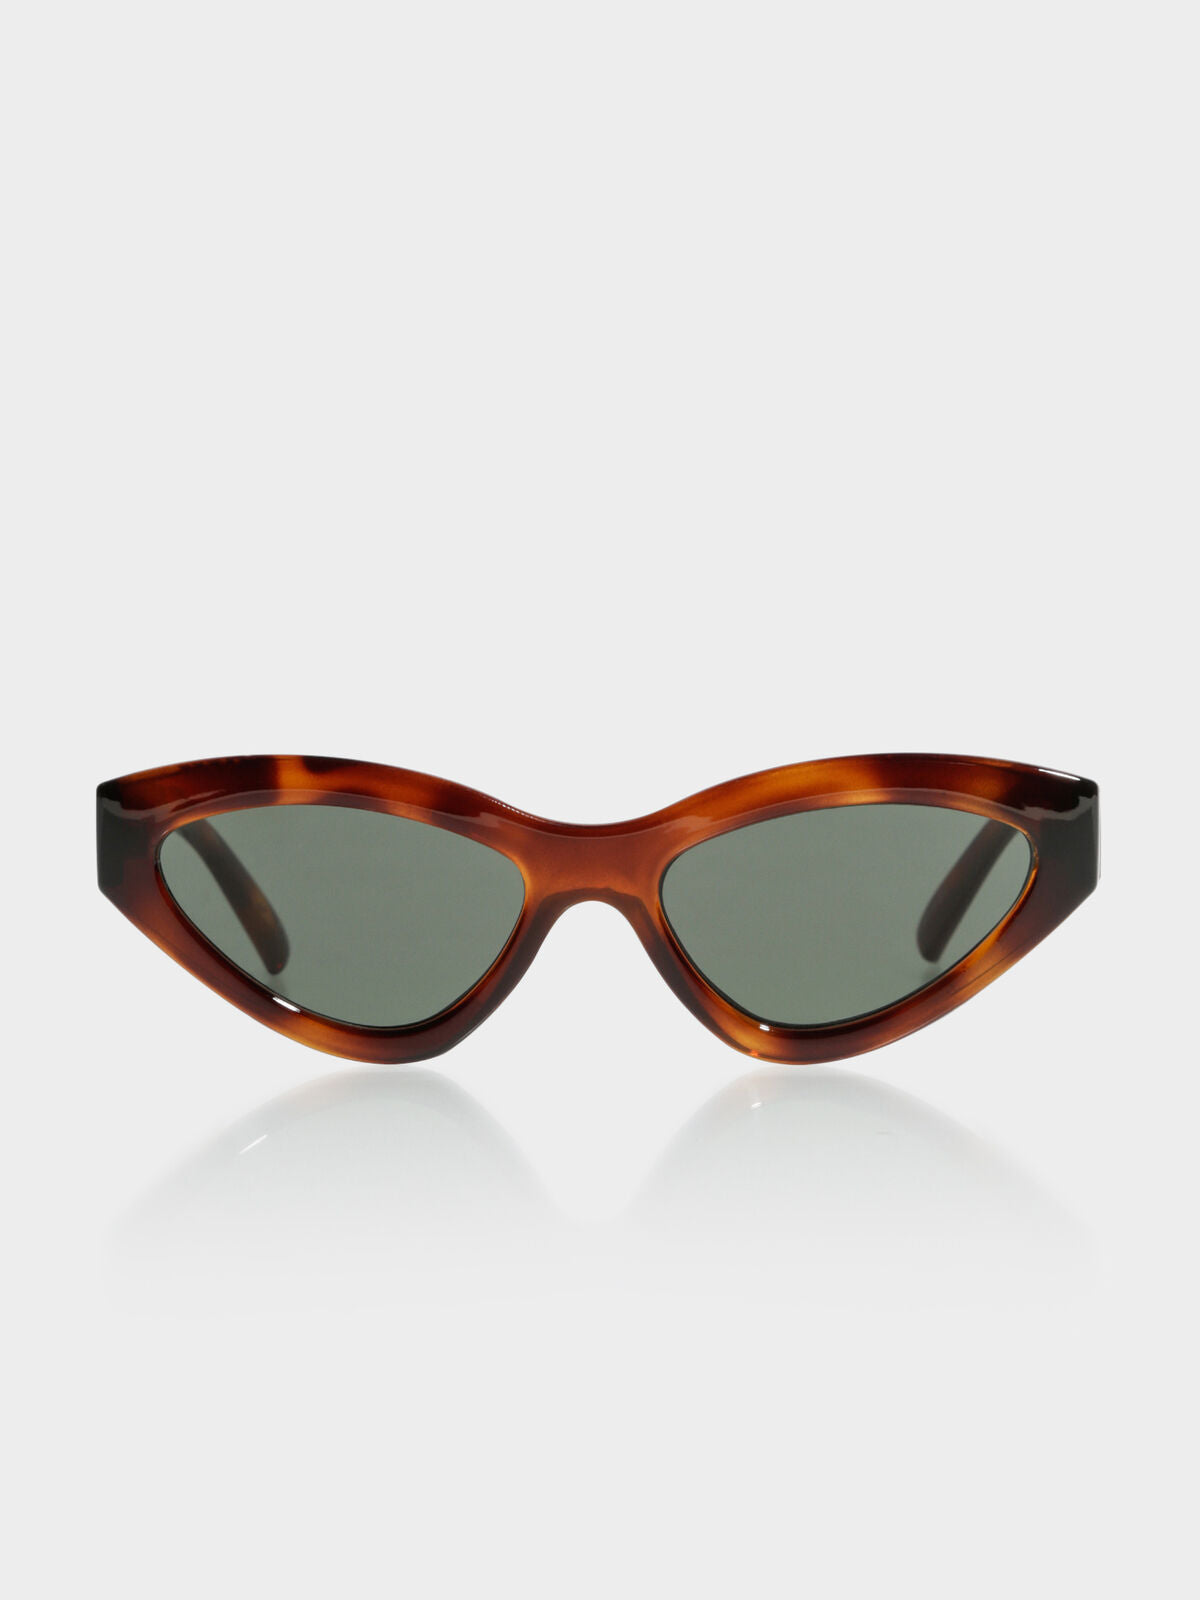 Synthcat Sunglasses in Tortoiseshell &amp; Khaki Mono